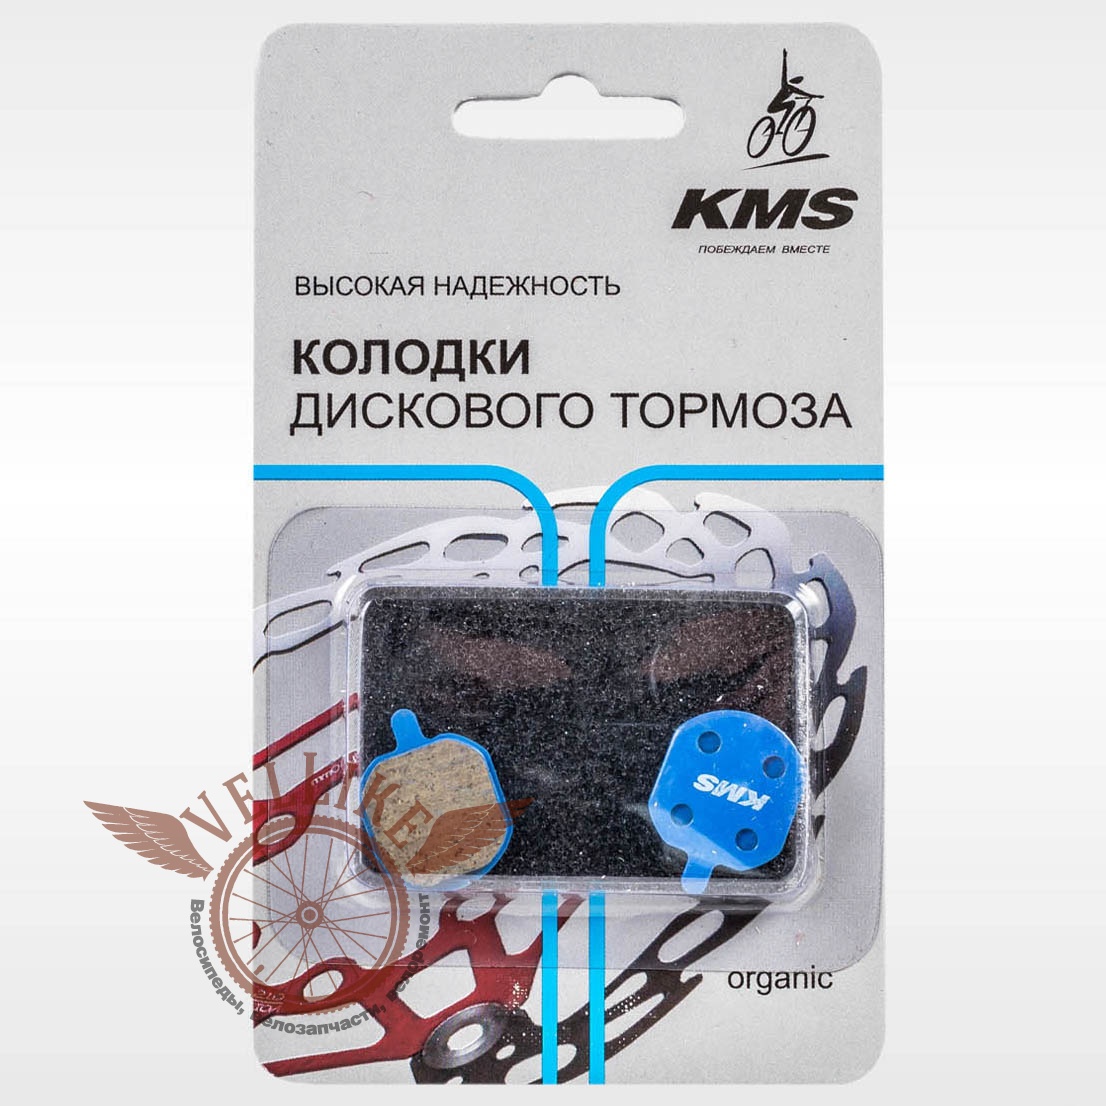 Колодки для дискового тормоза, материал органика, "KMS" 